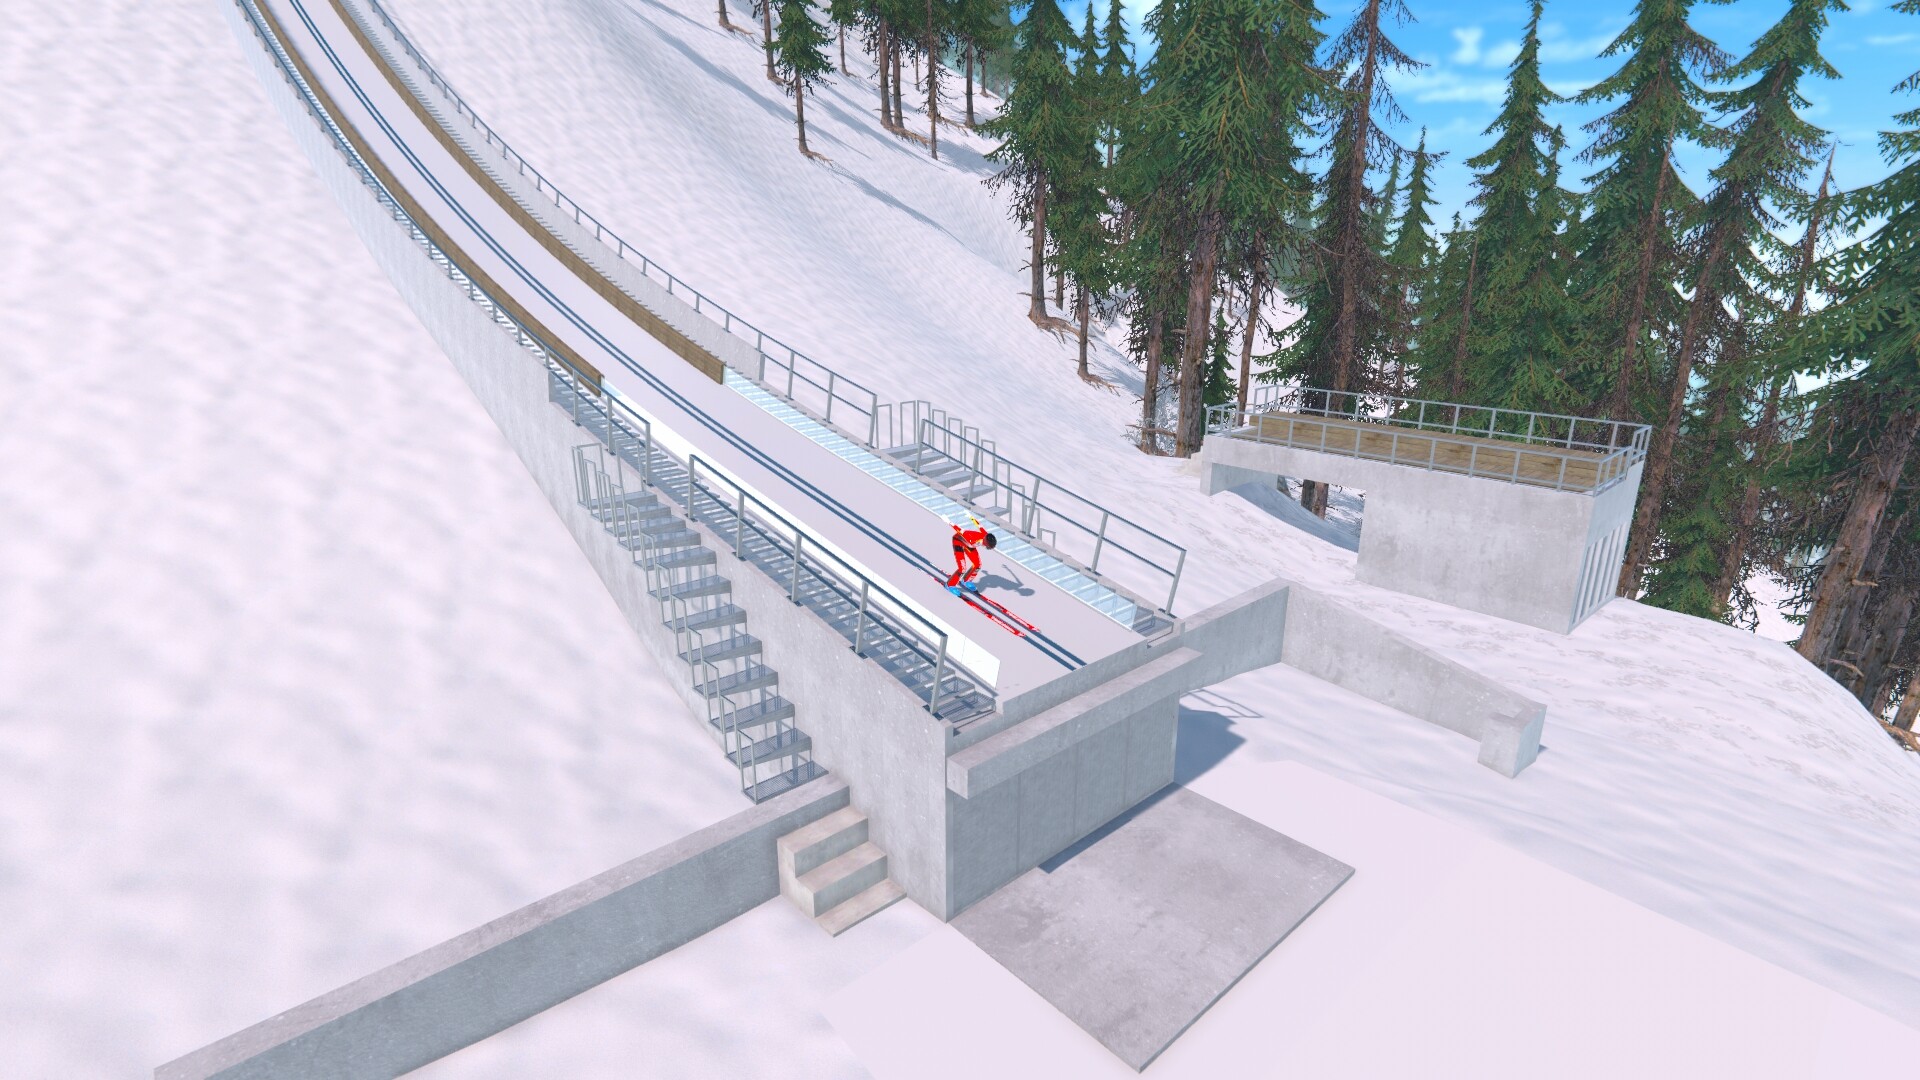 Ski Jumping PVP on Steam